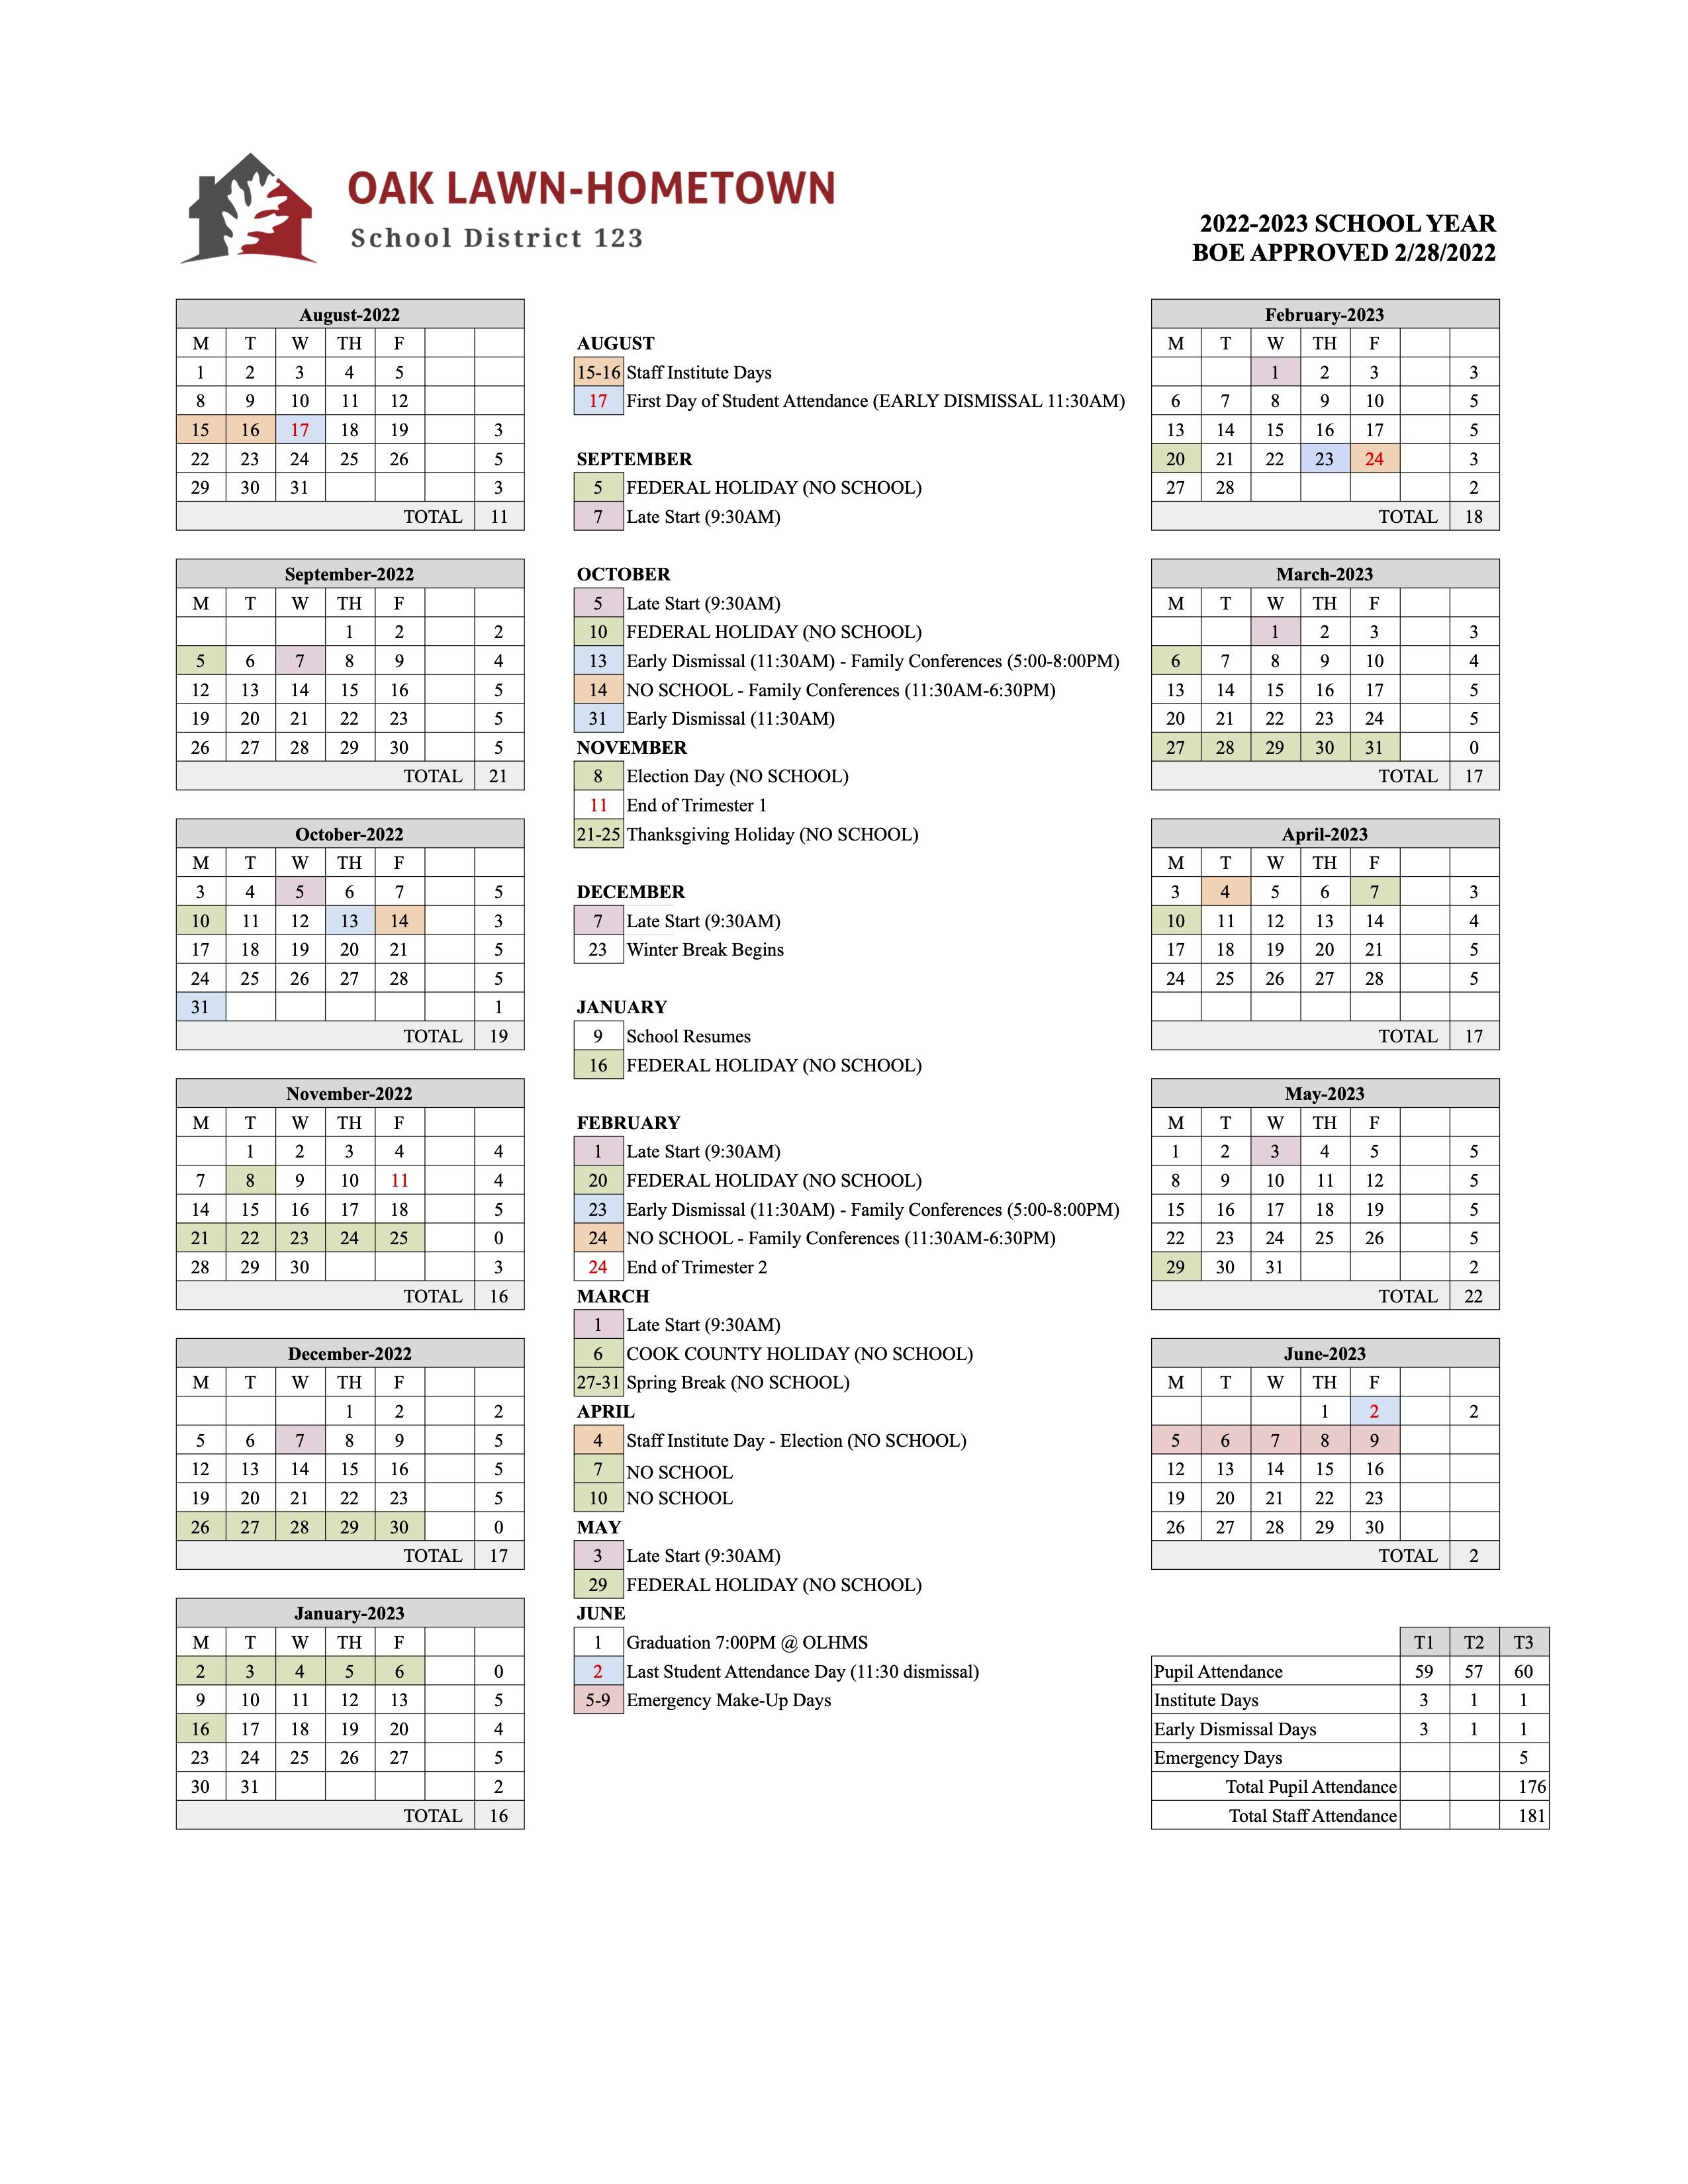 Northwestern Academic Calendar 2022 23 Hza9Hob2C-Jkgm